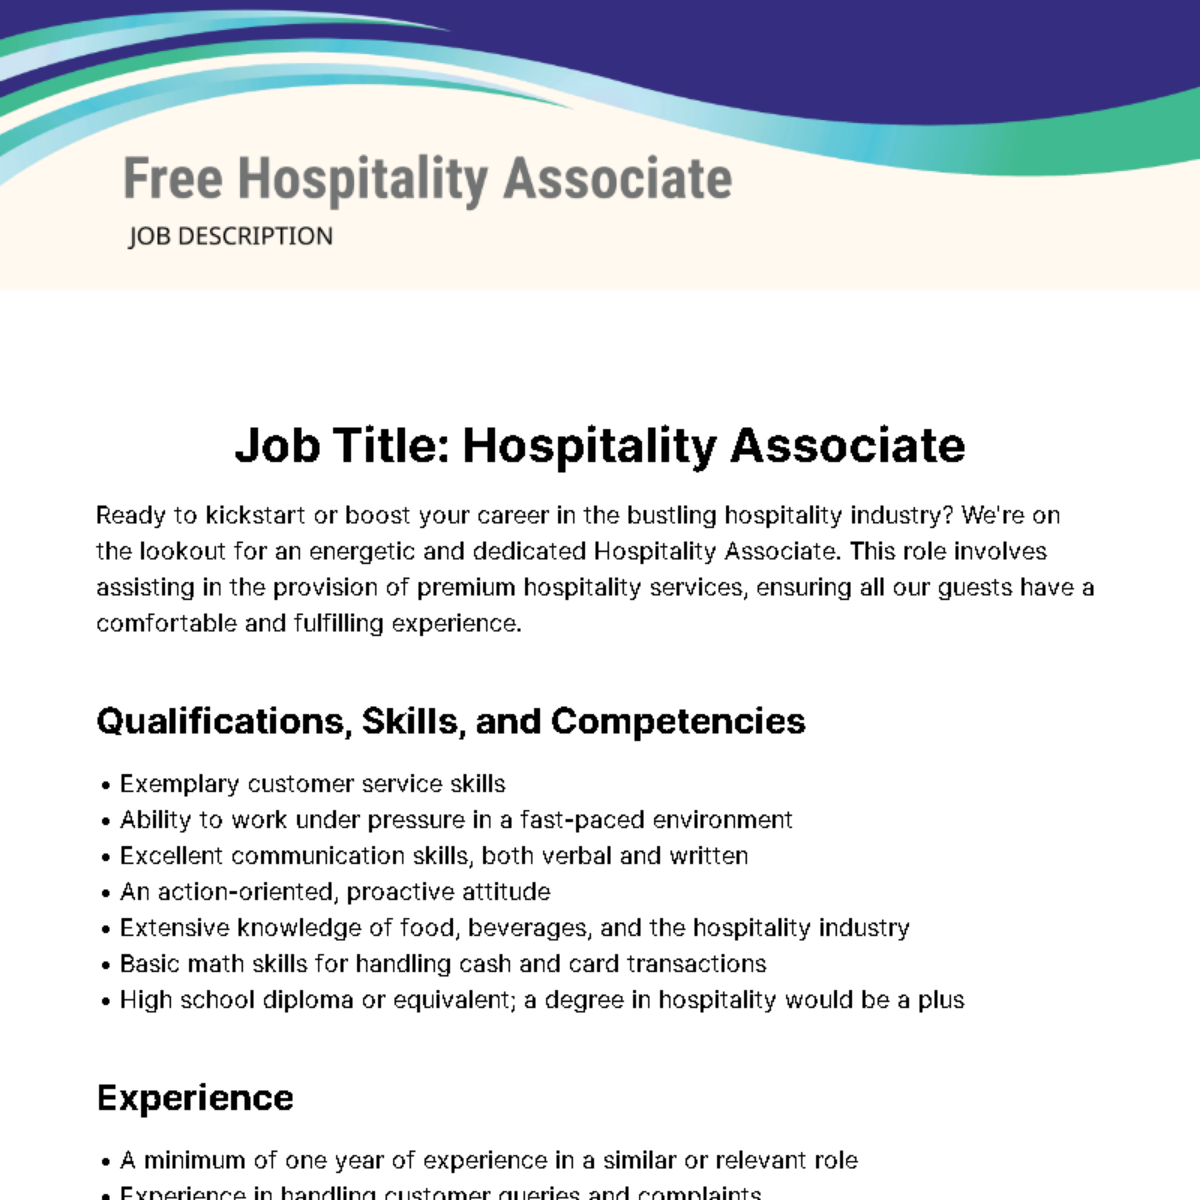 Free Hospitality Associate Job Description Template